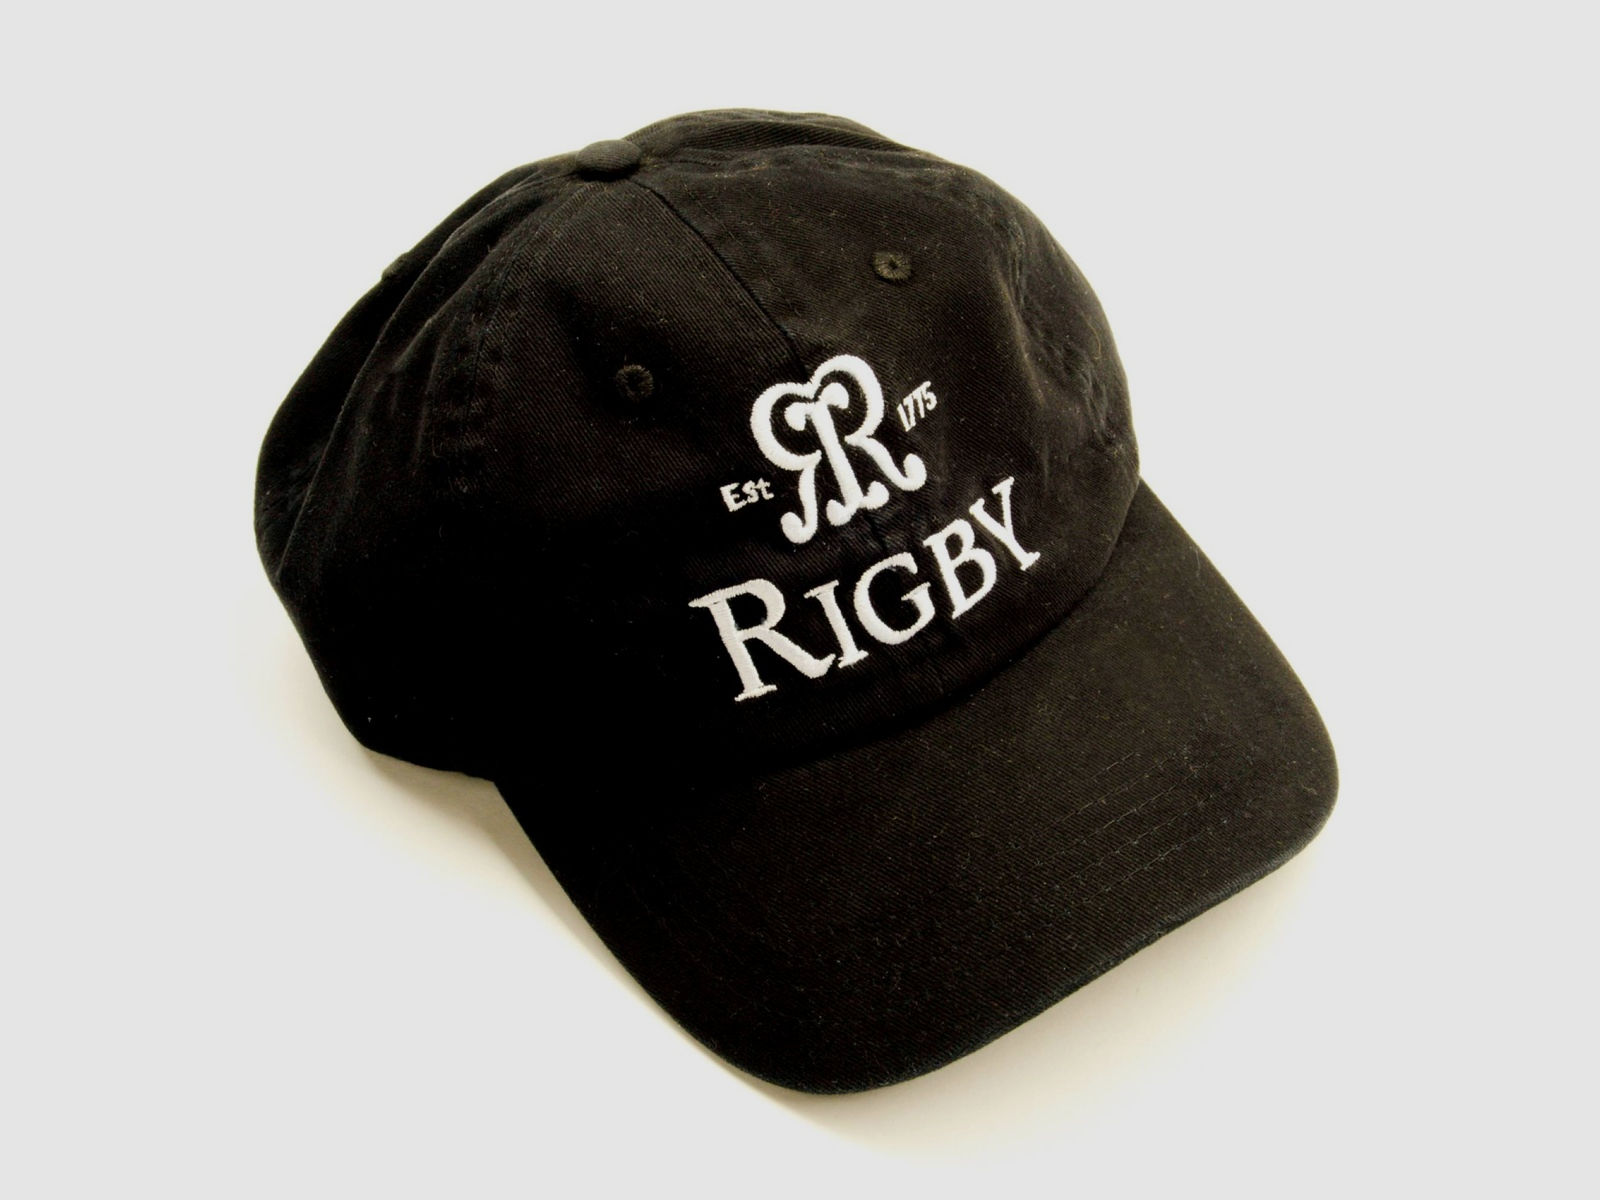 Rigby Baseballcap